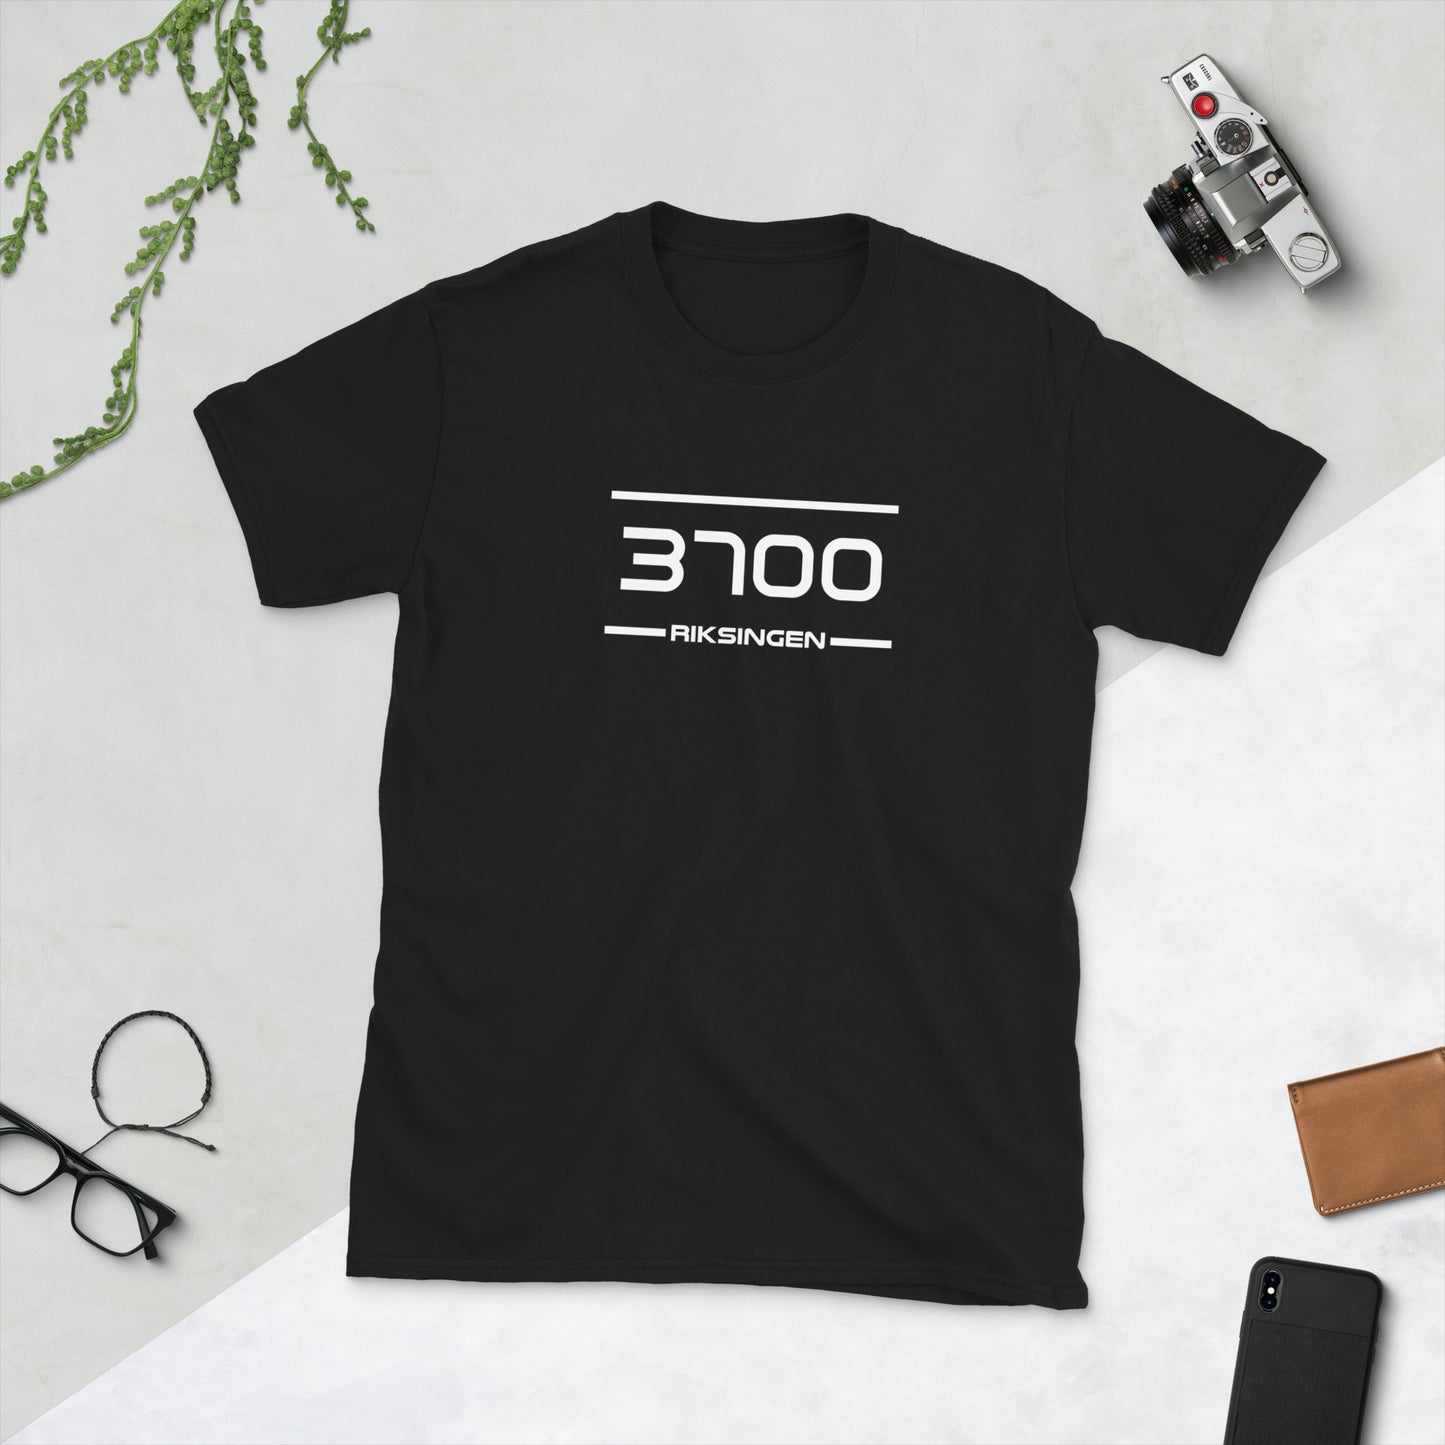 Tshirt - 3700 - Riksingen